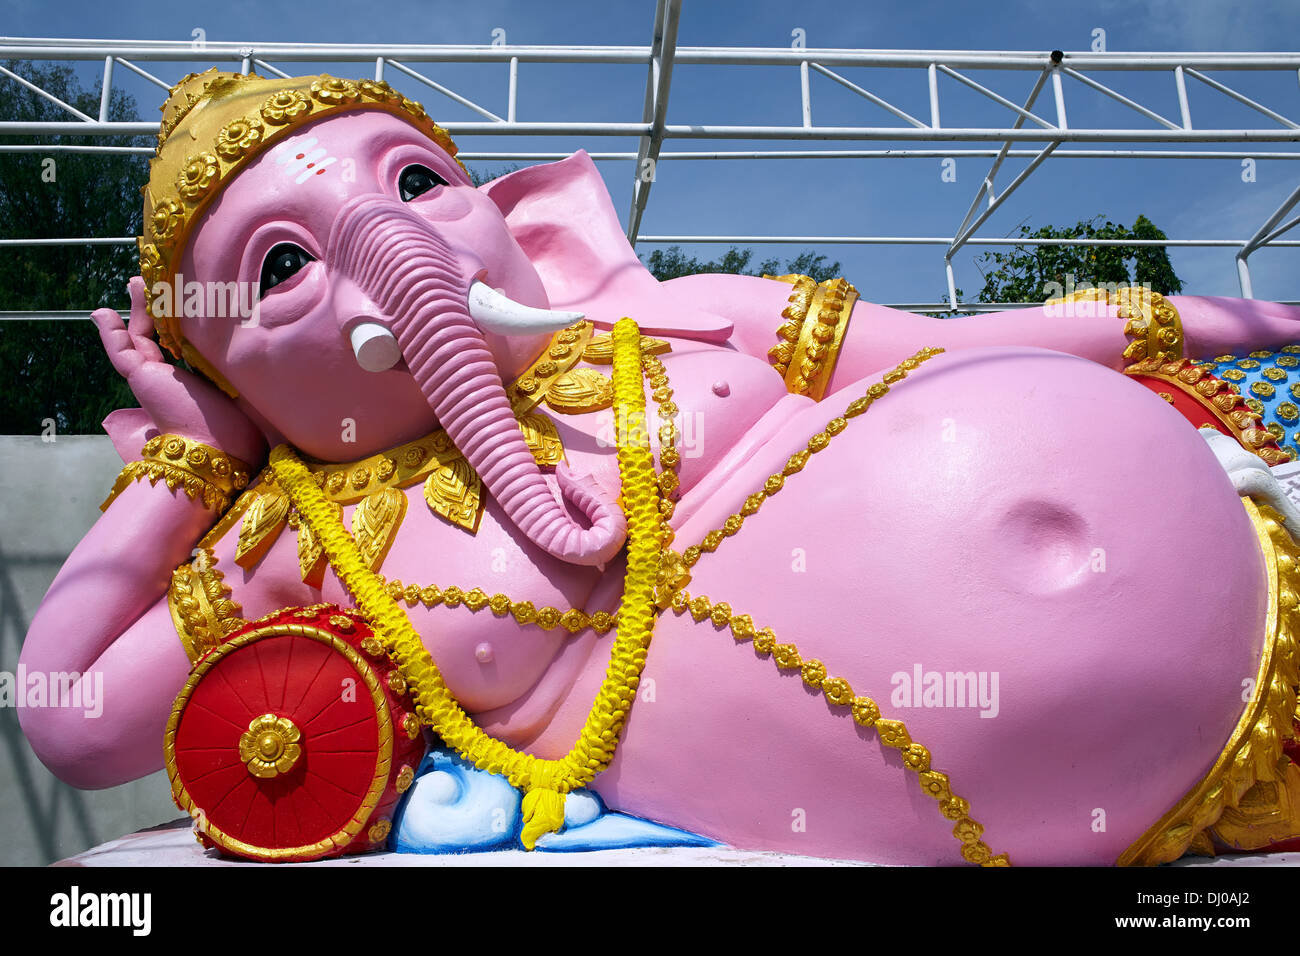 L'éléphant de Ganesha a dirigé dieu; Reclining rose Ganesha deity statue Thaïlande S. E. Asia Banque D'Images